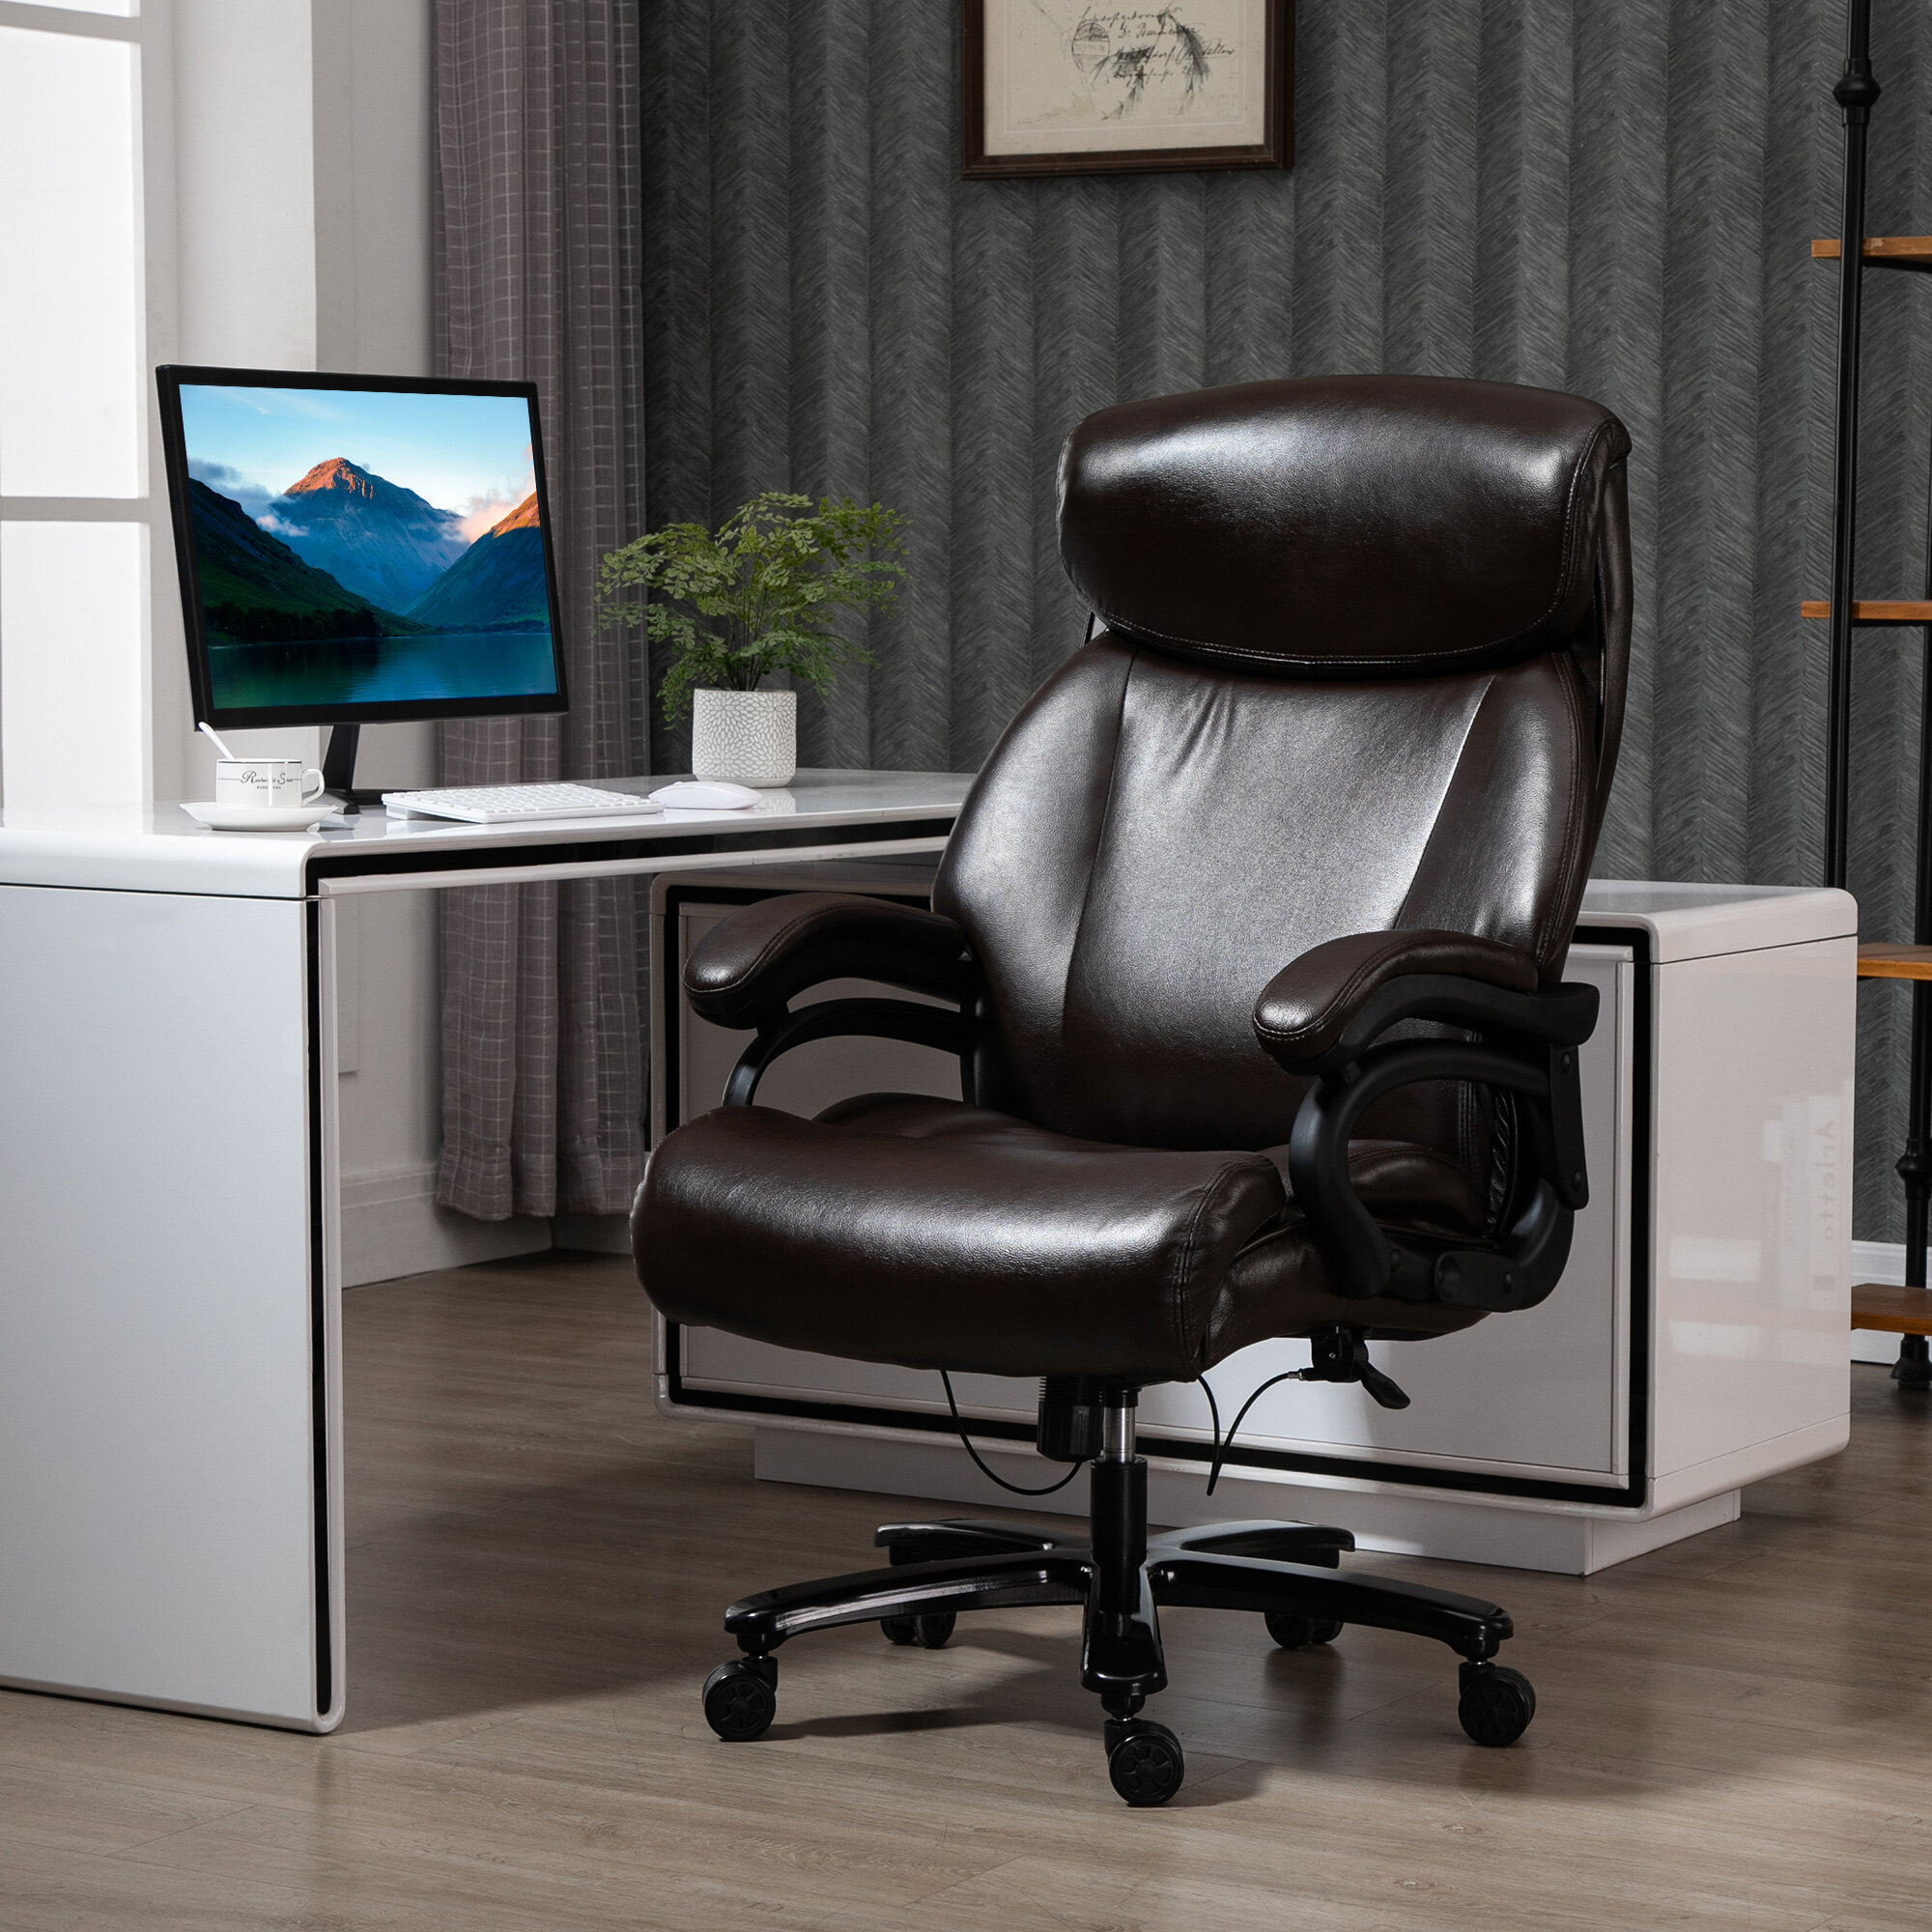 Blue Elephant Bürostuhl Chefsessel Gaming Stuhl Drehstuhl Wippfunktion  Dicke Polsterung 180 kg Belastbarkeit